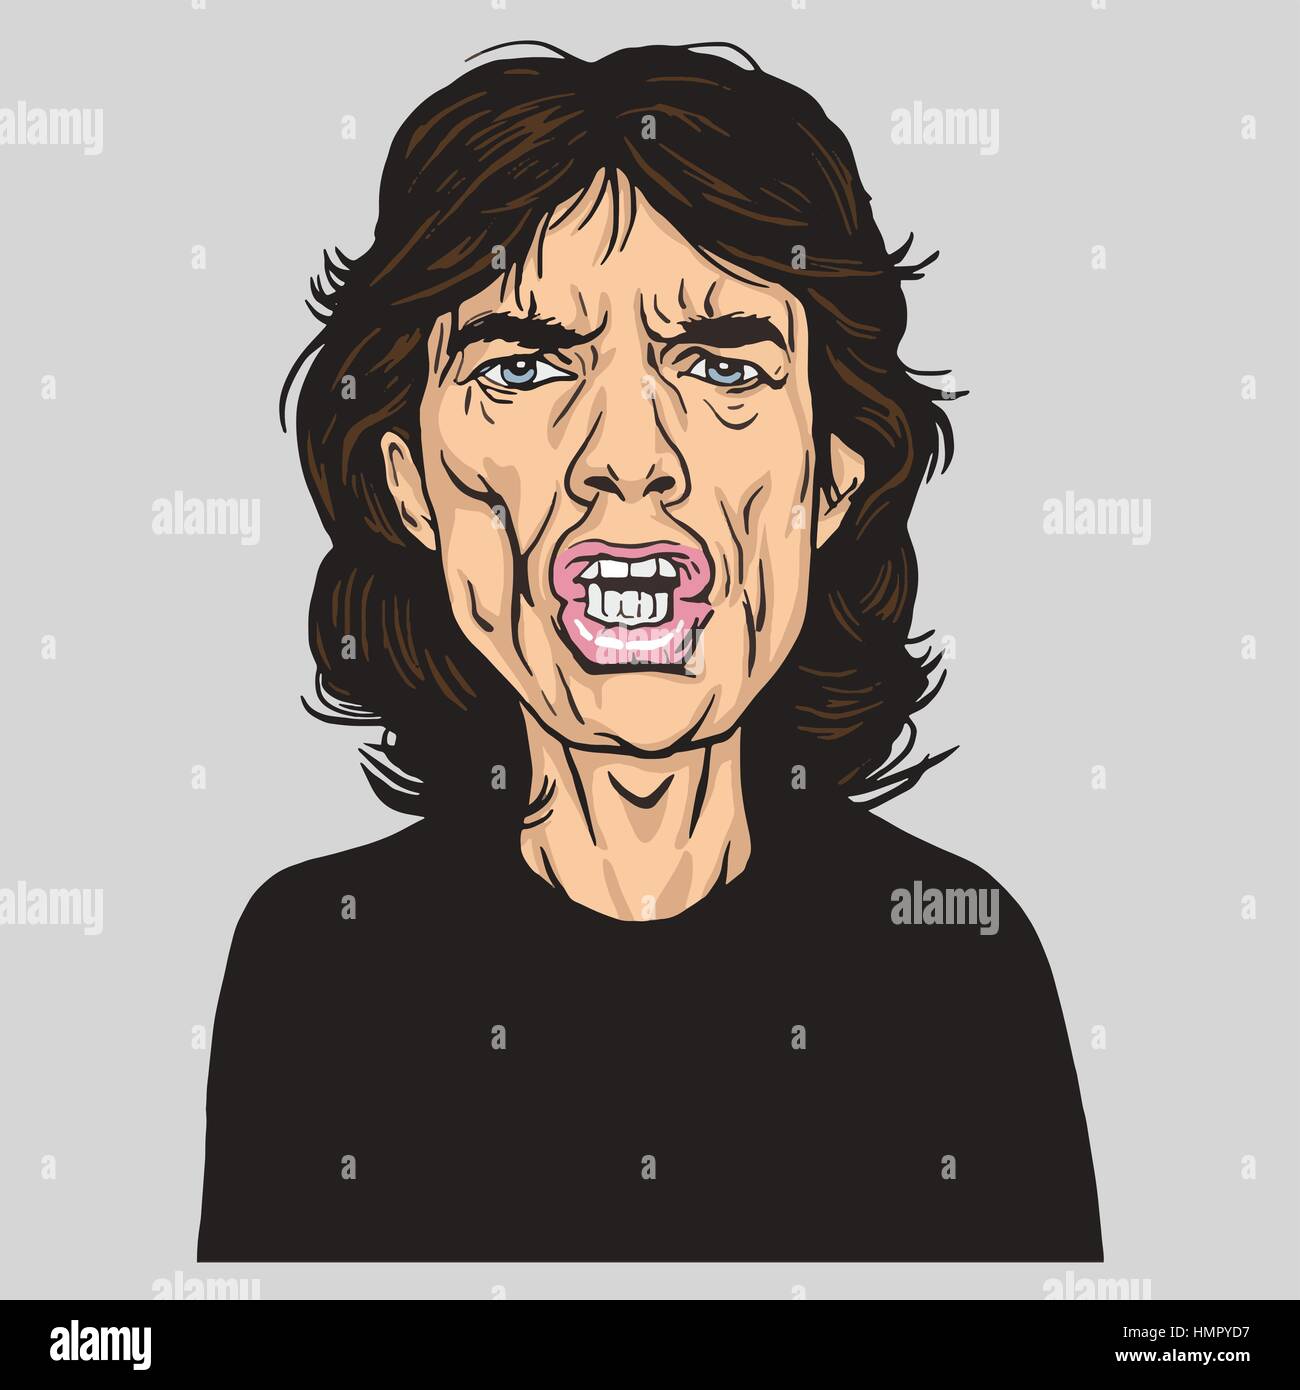 Mick Jagger Vector Portrait Illustration Caricature Stock Vector